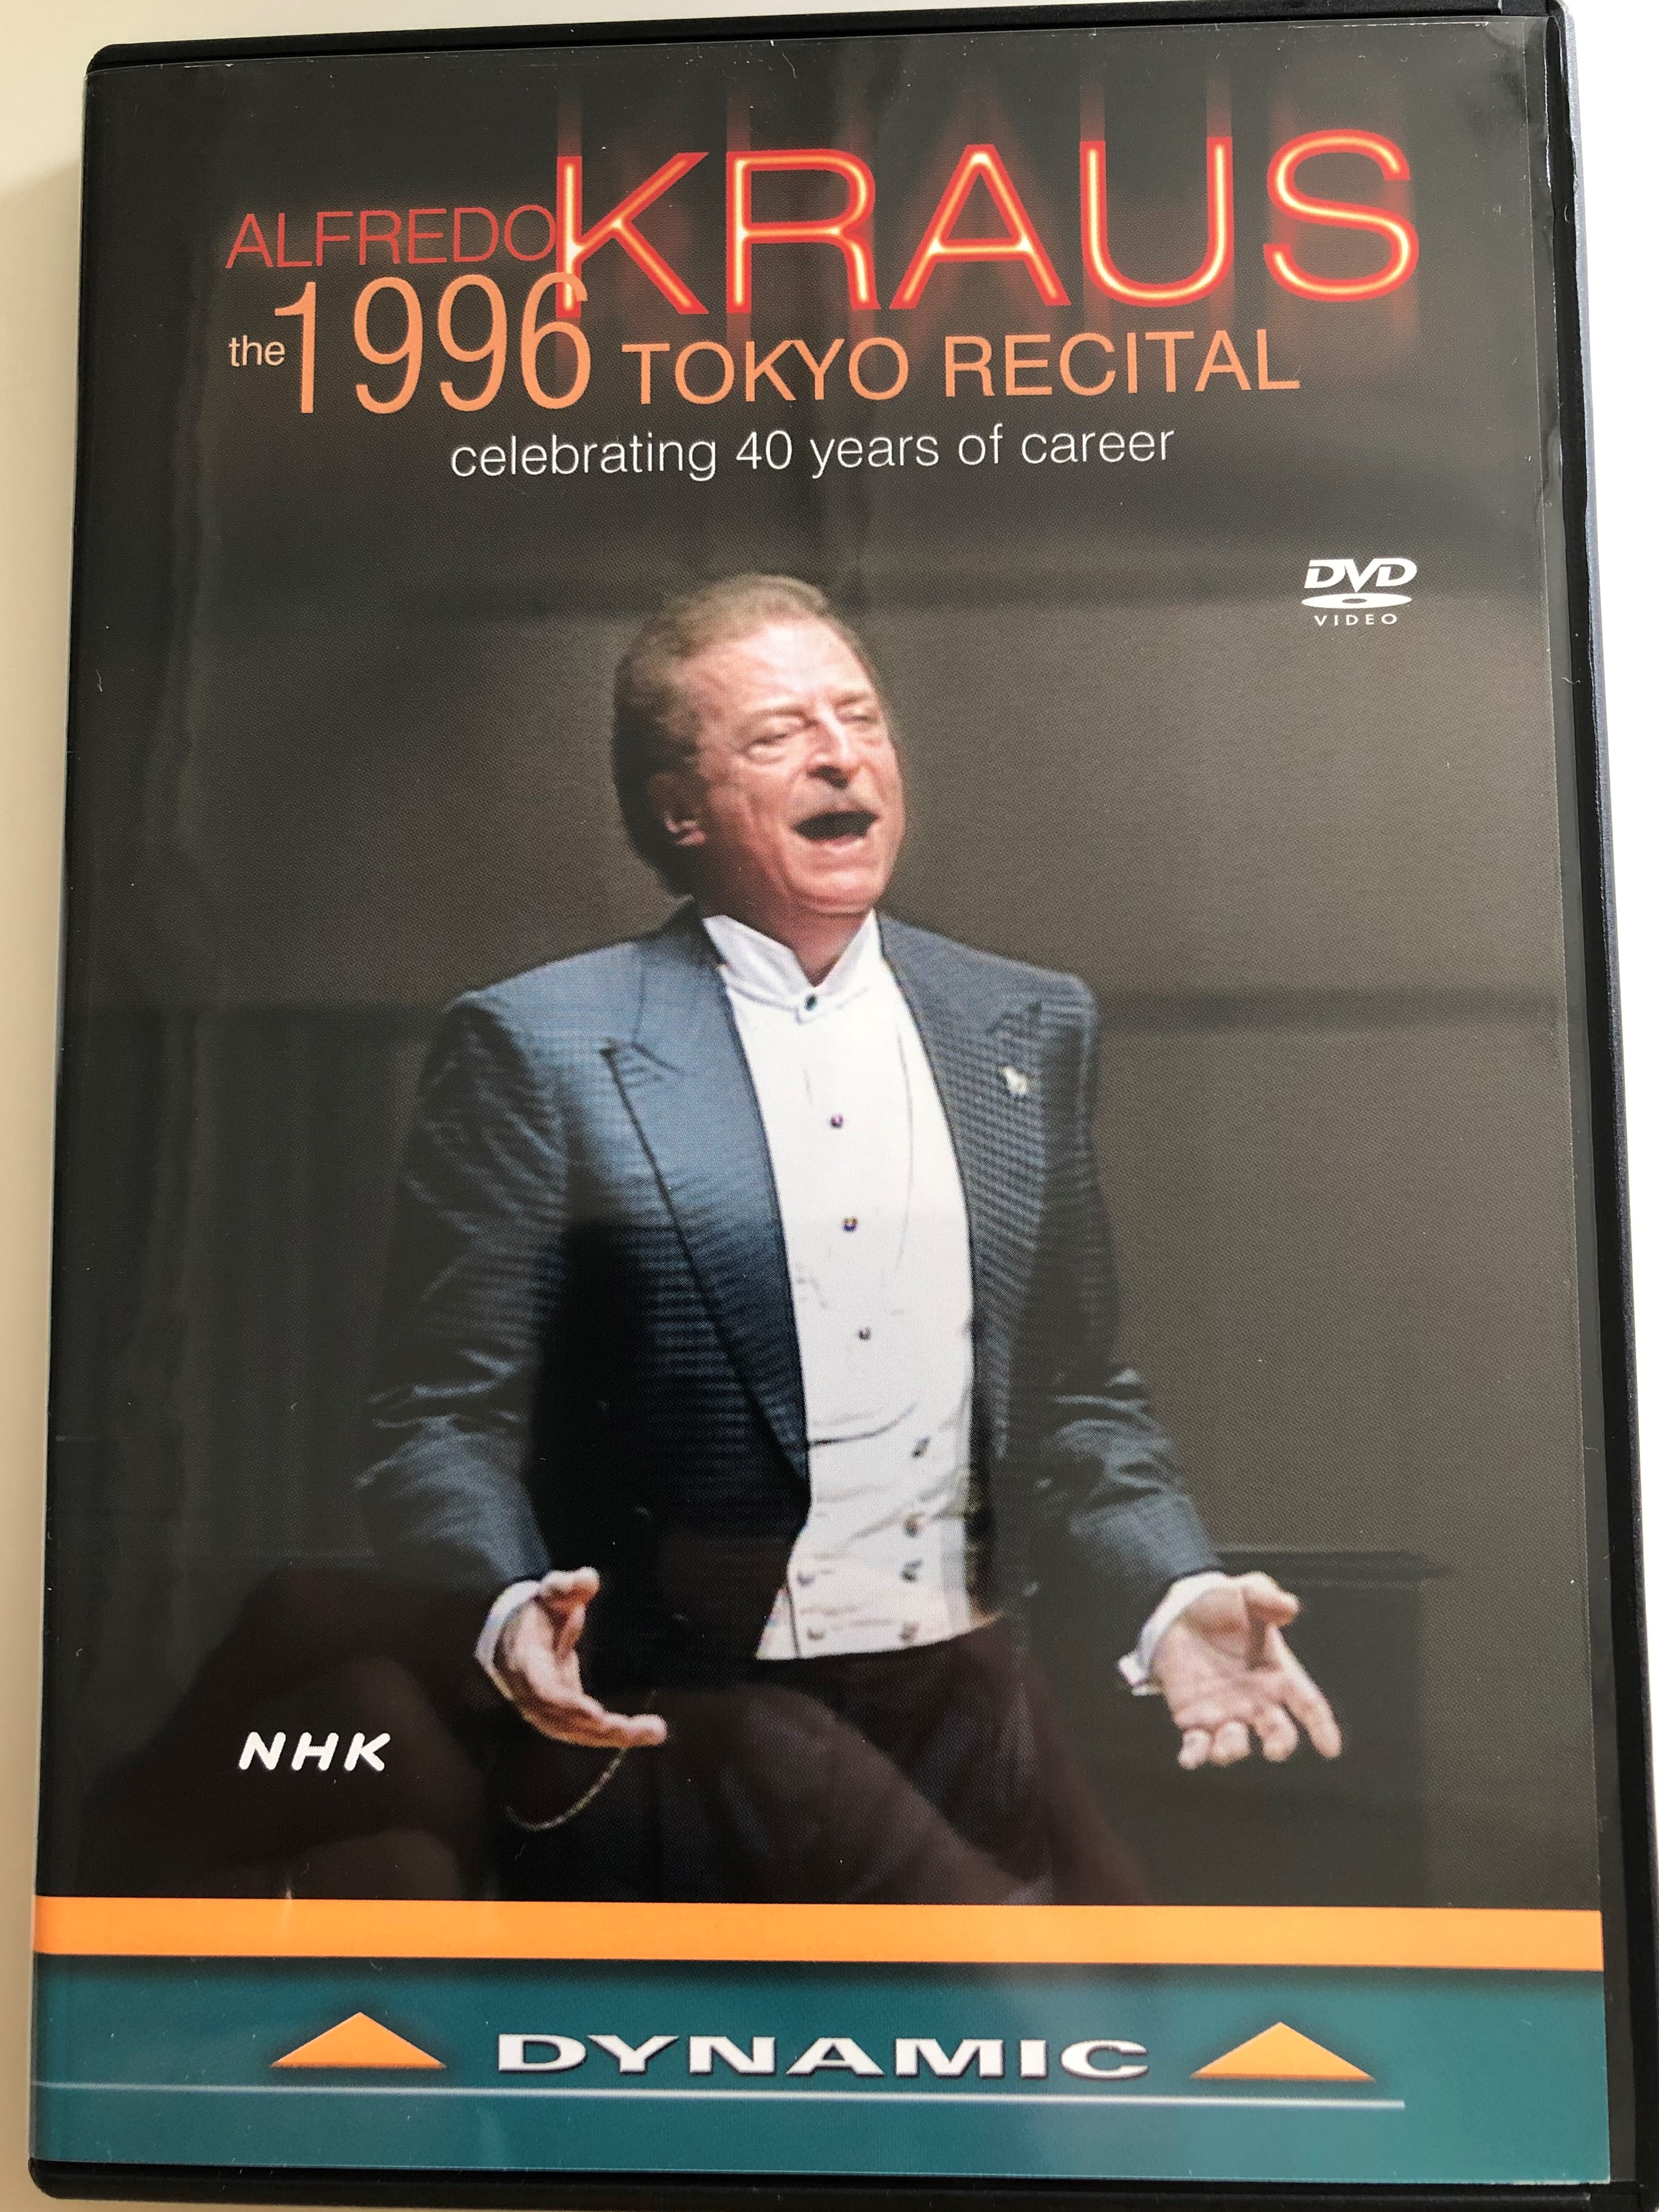 afredo-kraus-the-1996-tokyo-recital-dvd-2010-celebrating-40-years-of-career-recorded-at-tokyo-bunkamura-orchard-hall-1996-alfredo-kraus-tenor-emiko-suga-soprano-edelmiro-arnaltes-piano-asier-polo-cello-1-.jpg